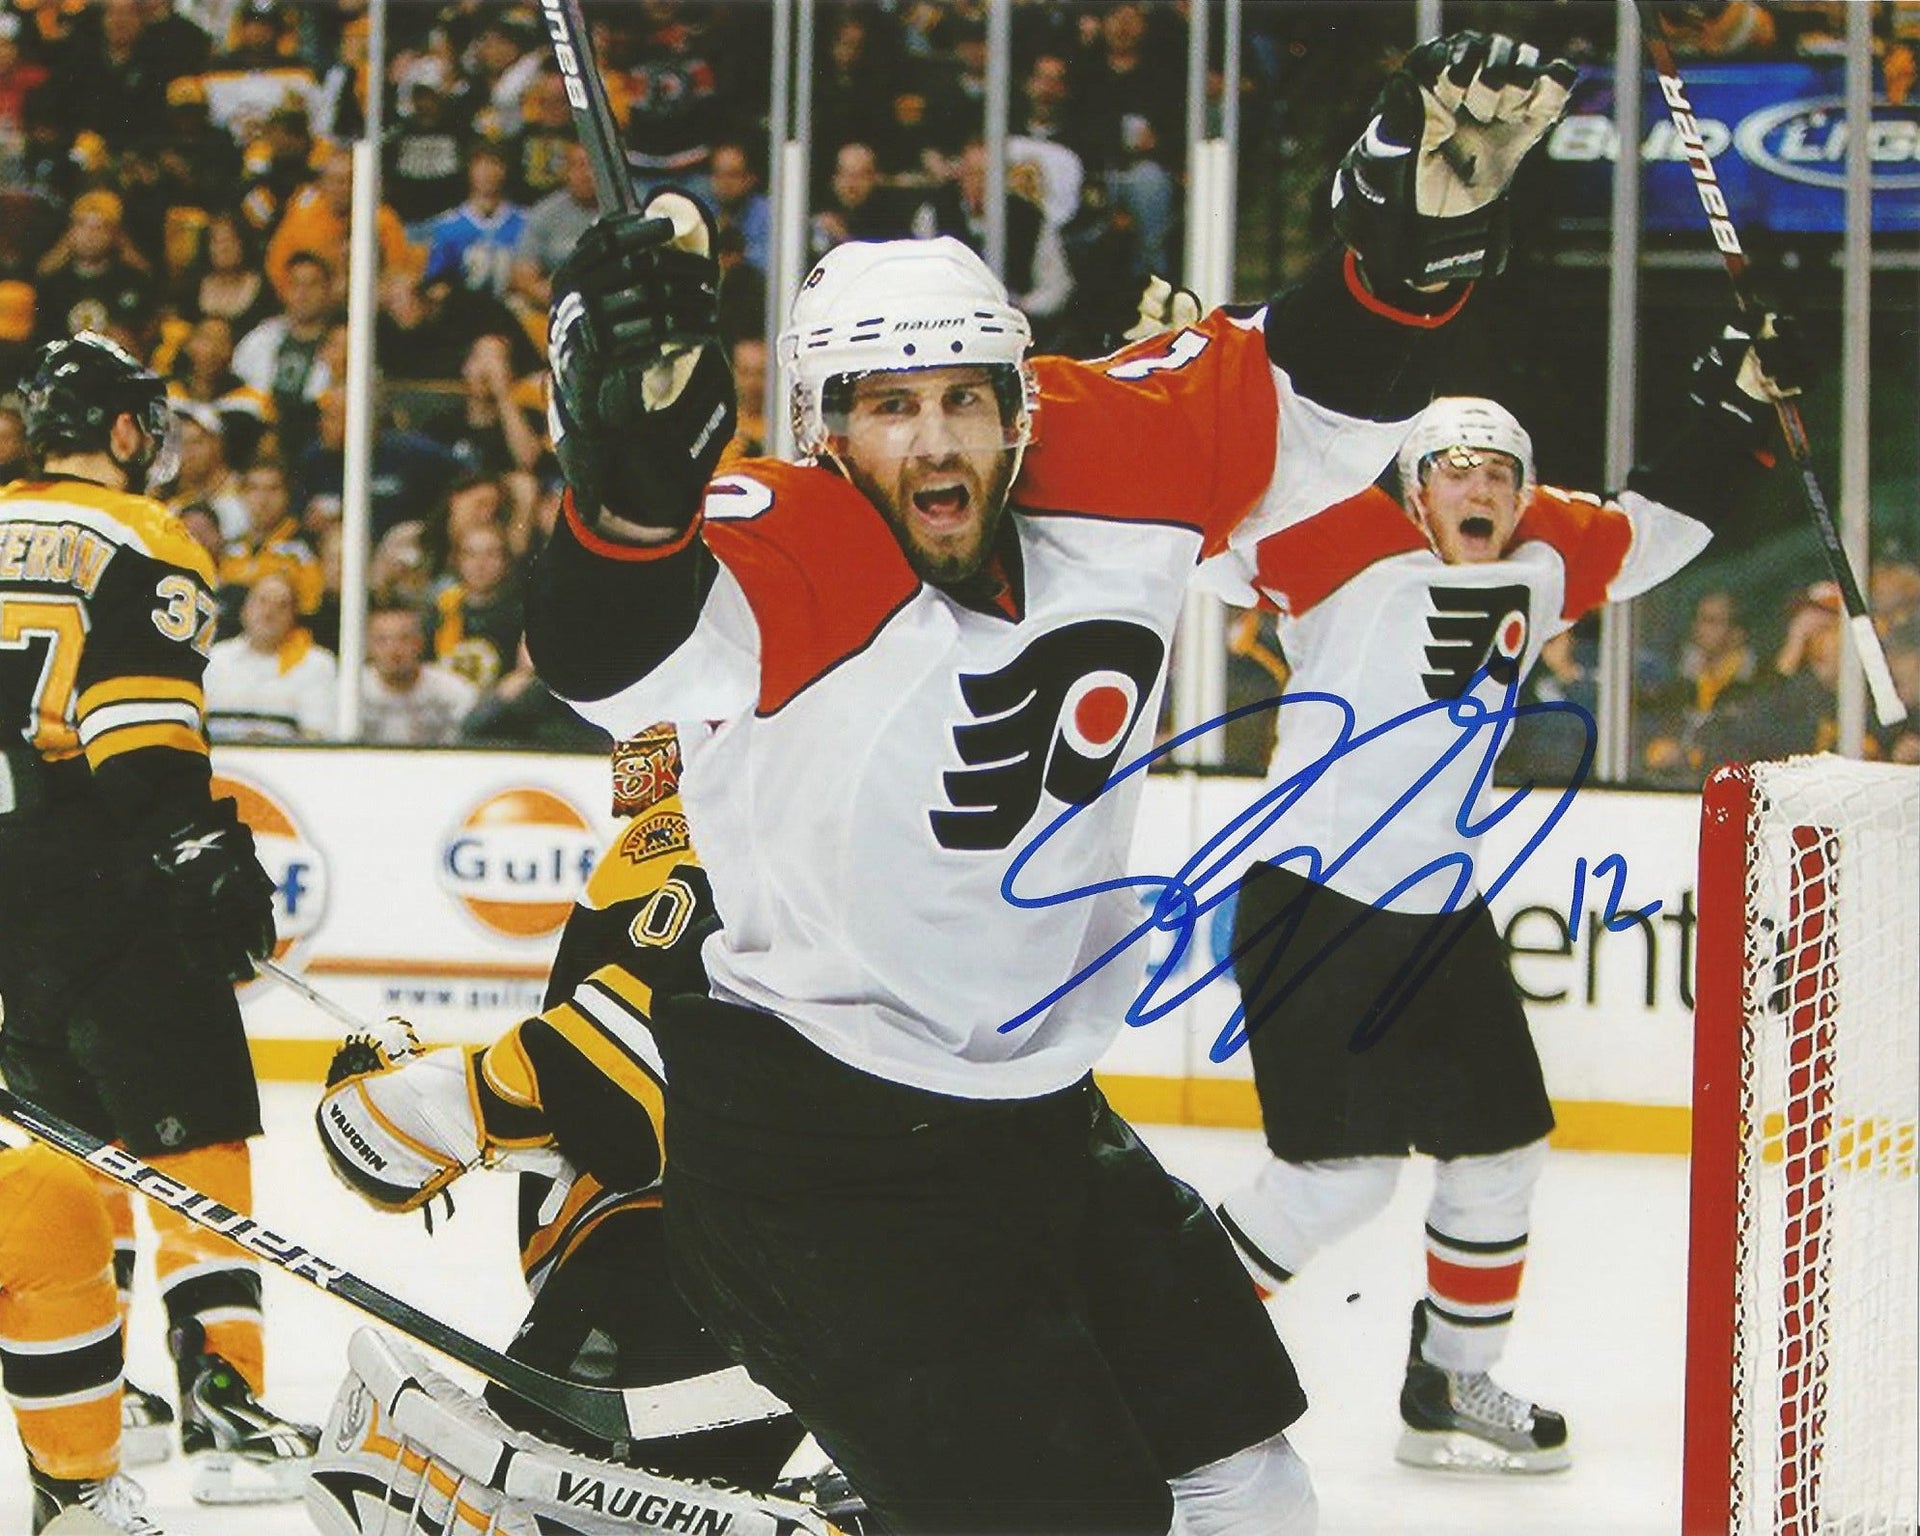 Simon Gagne Philadelphia Flyers Game 7 Game-Winning Goal v. Bruins Autographed Photo - Dynasty Sports & Framing 